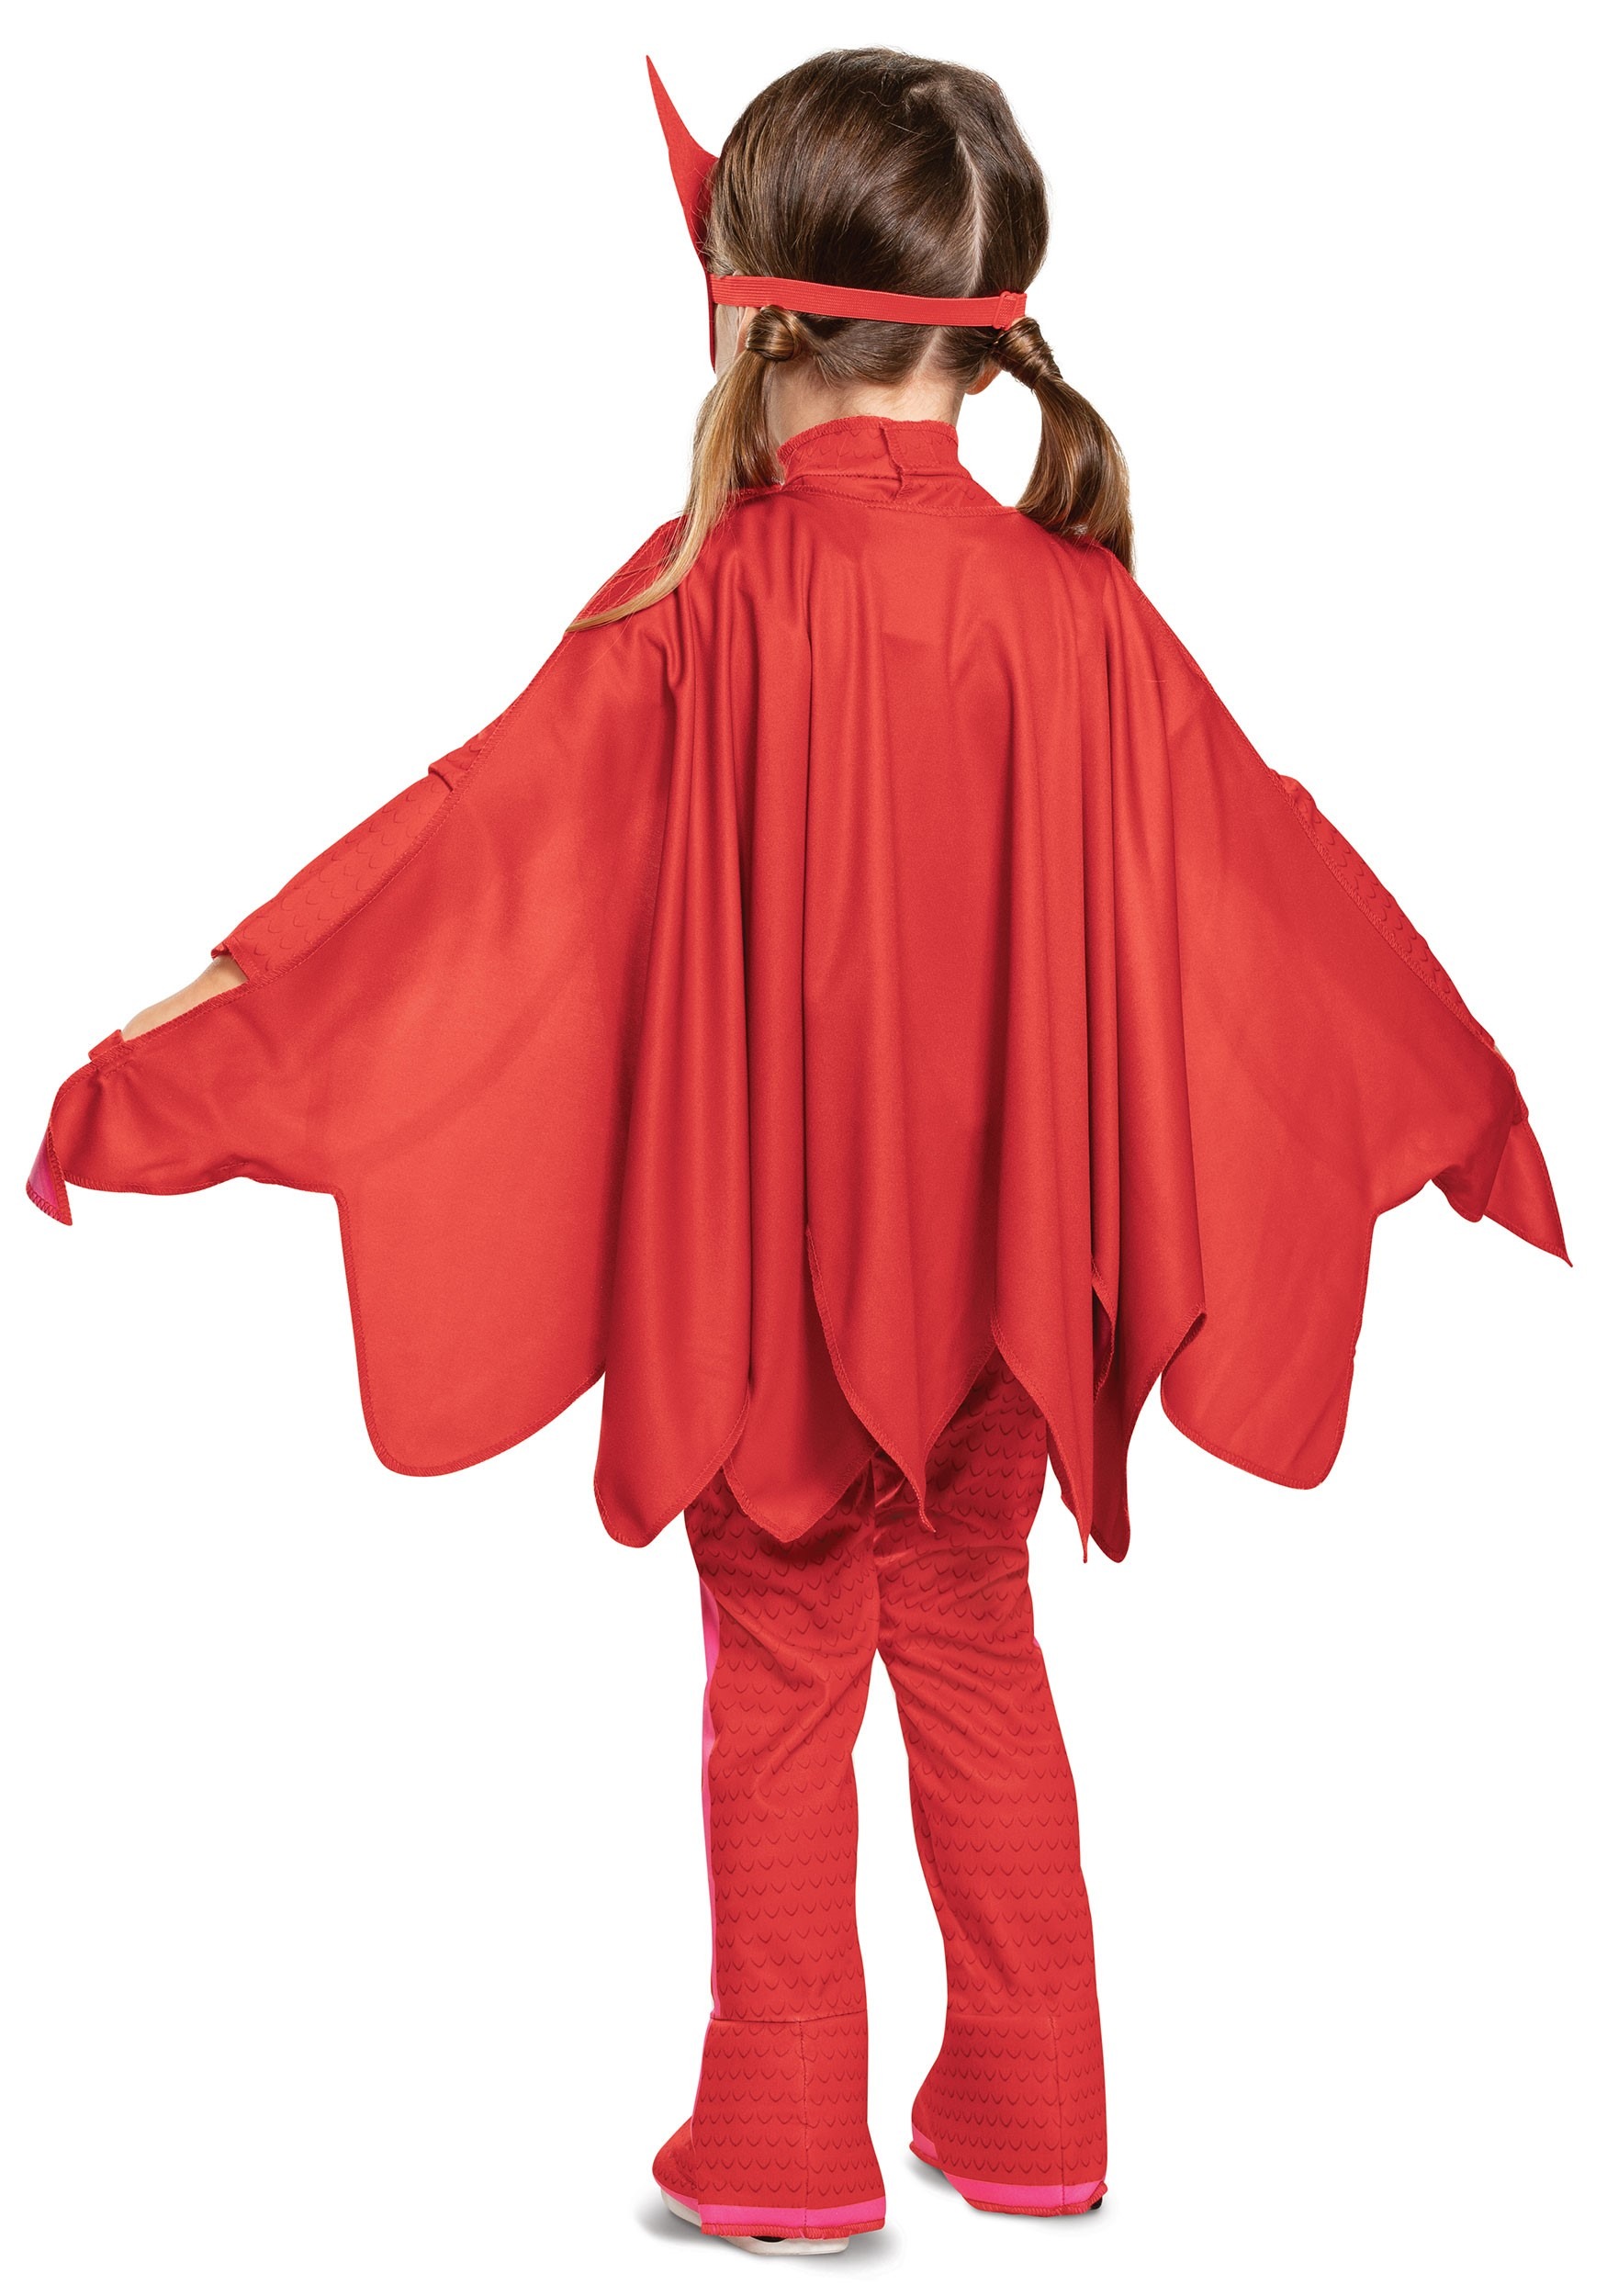 Pj Masks Owlette Deluxe Toddler Girl Character Red Costume Mask 